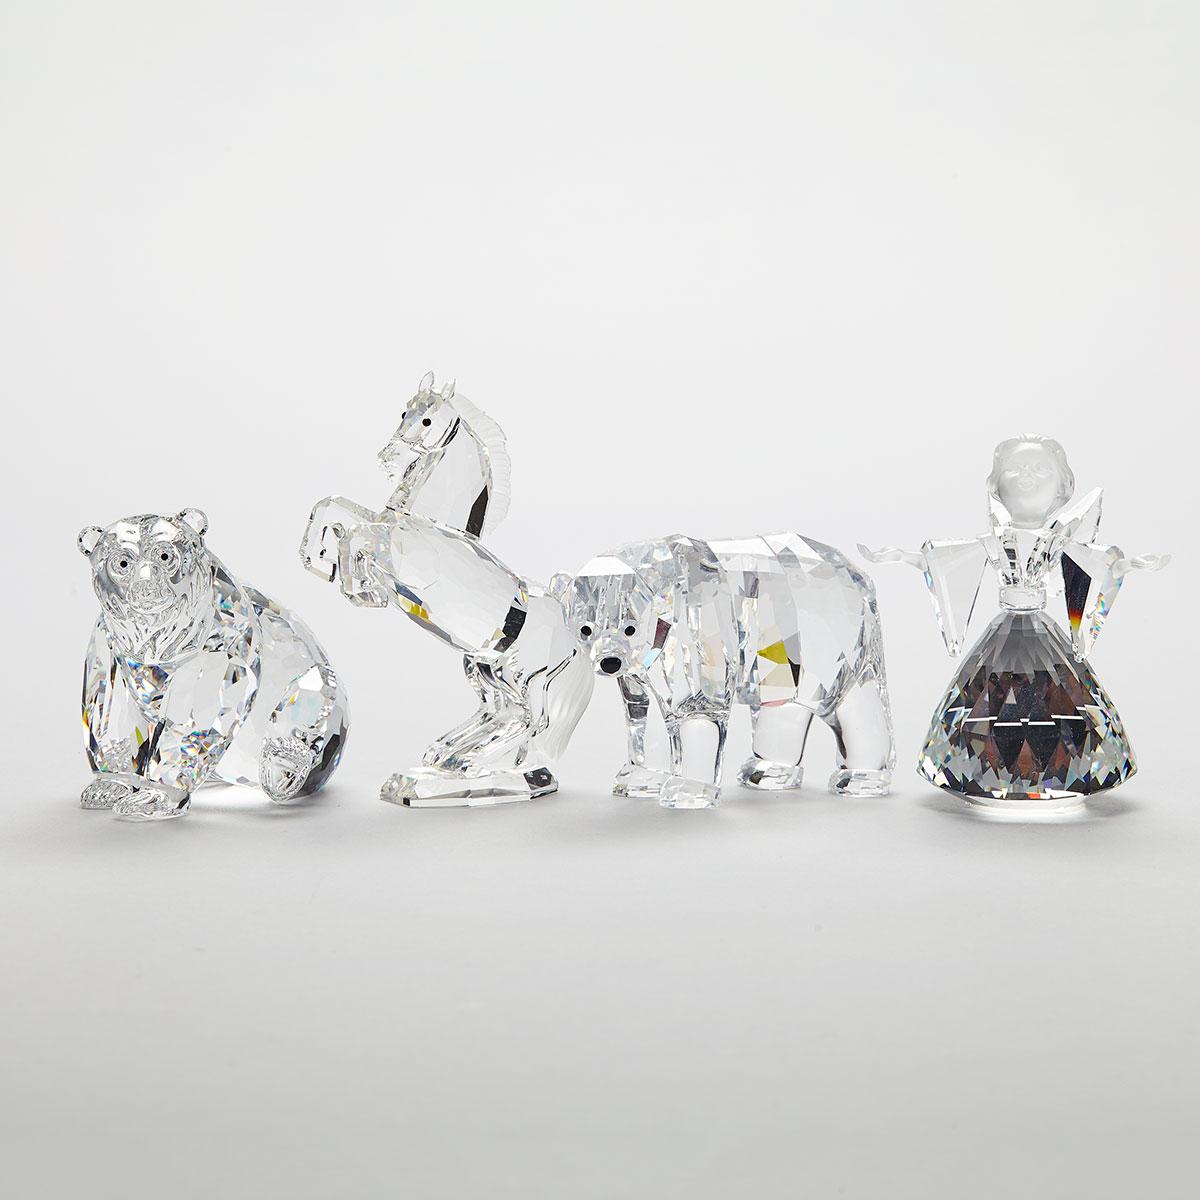 Four Swarovski Crystal Figurines, early 21st century